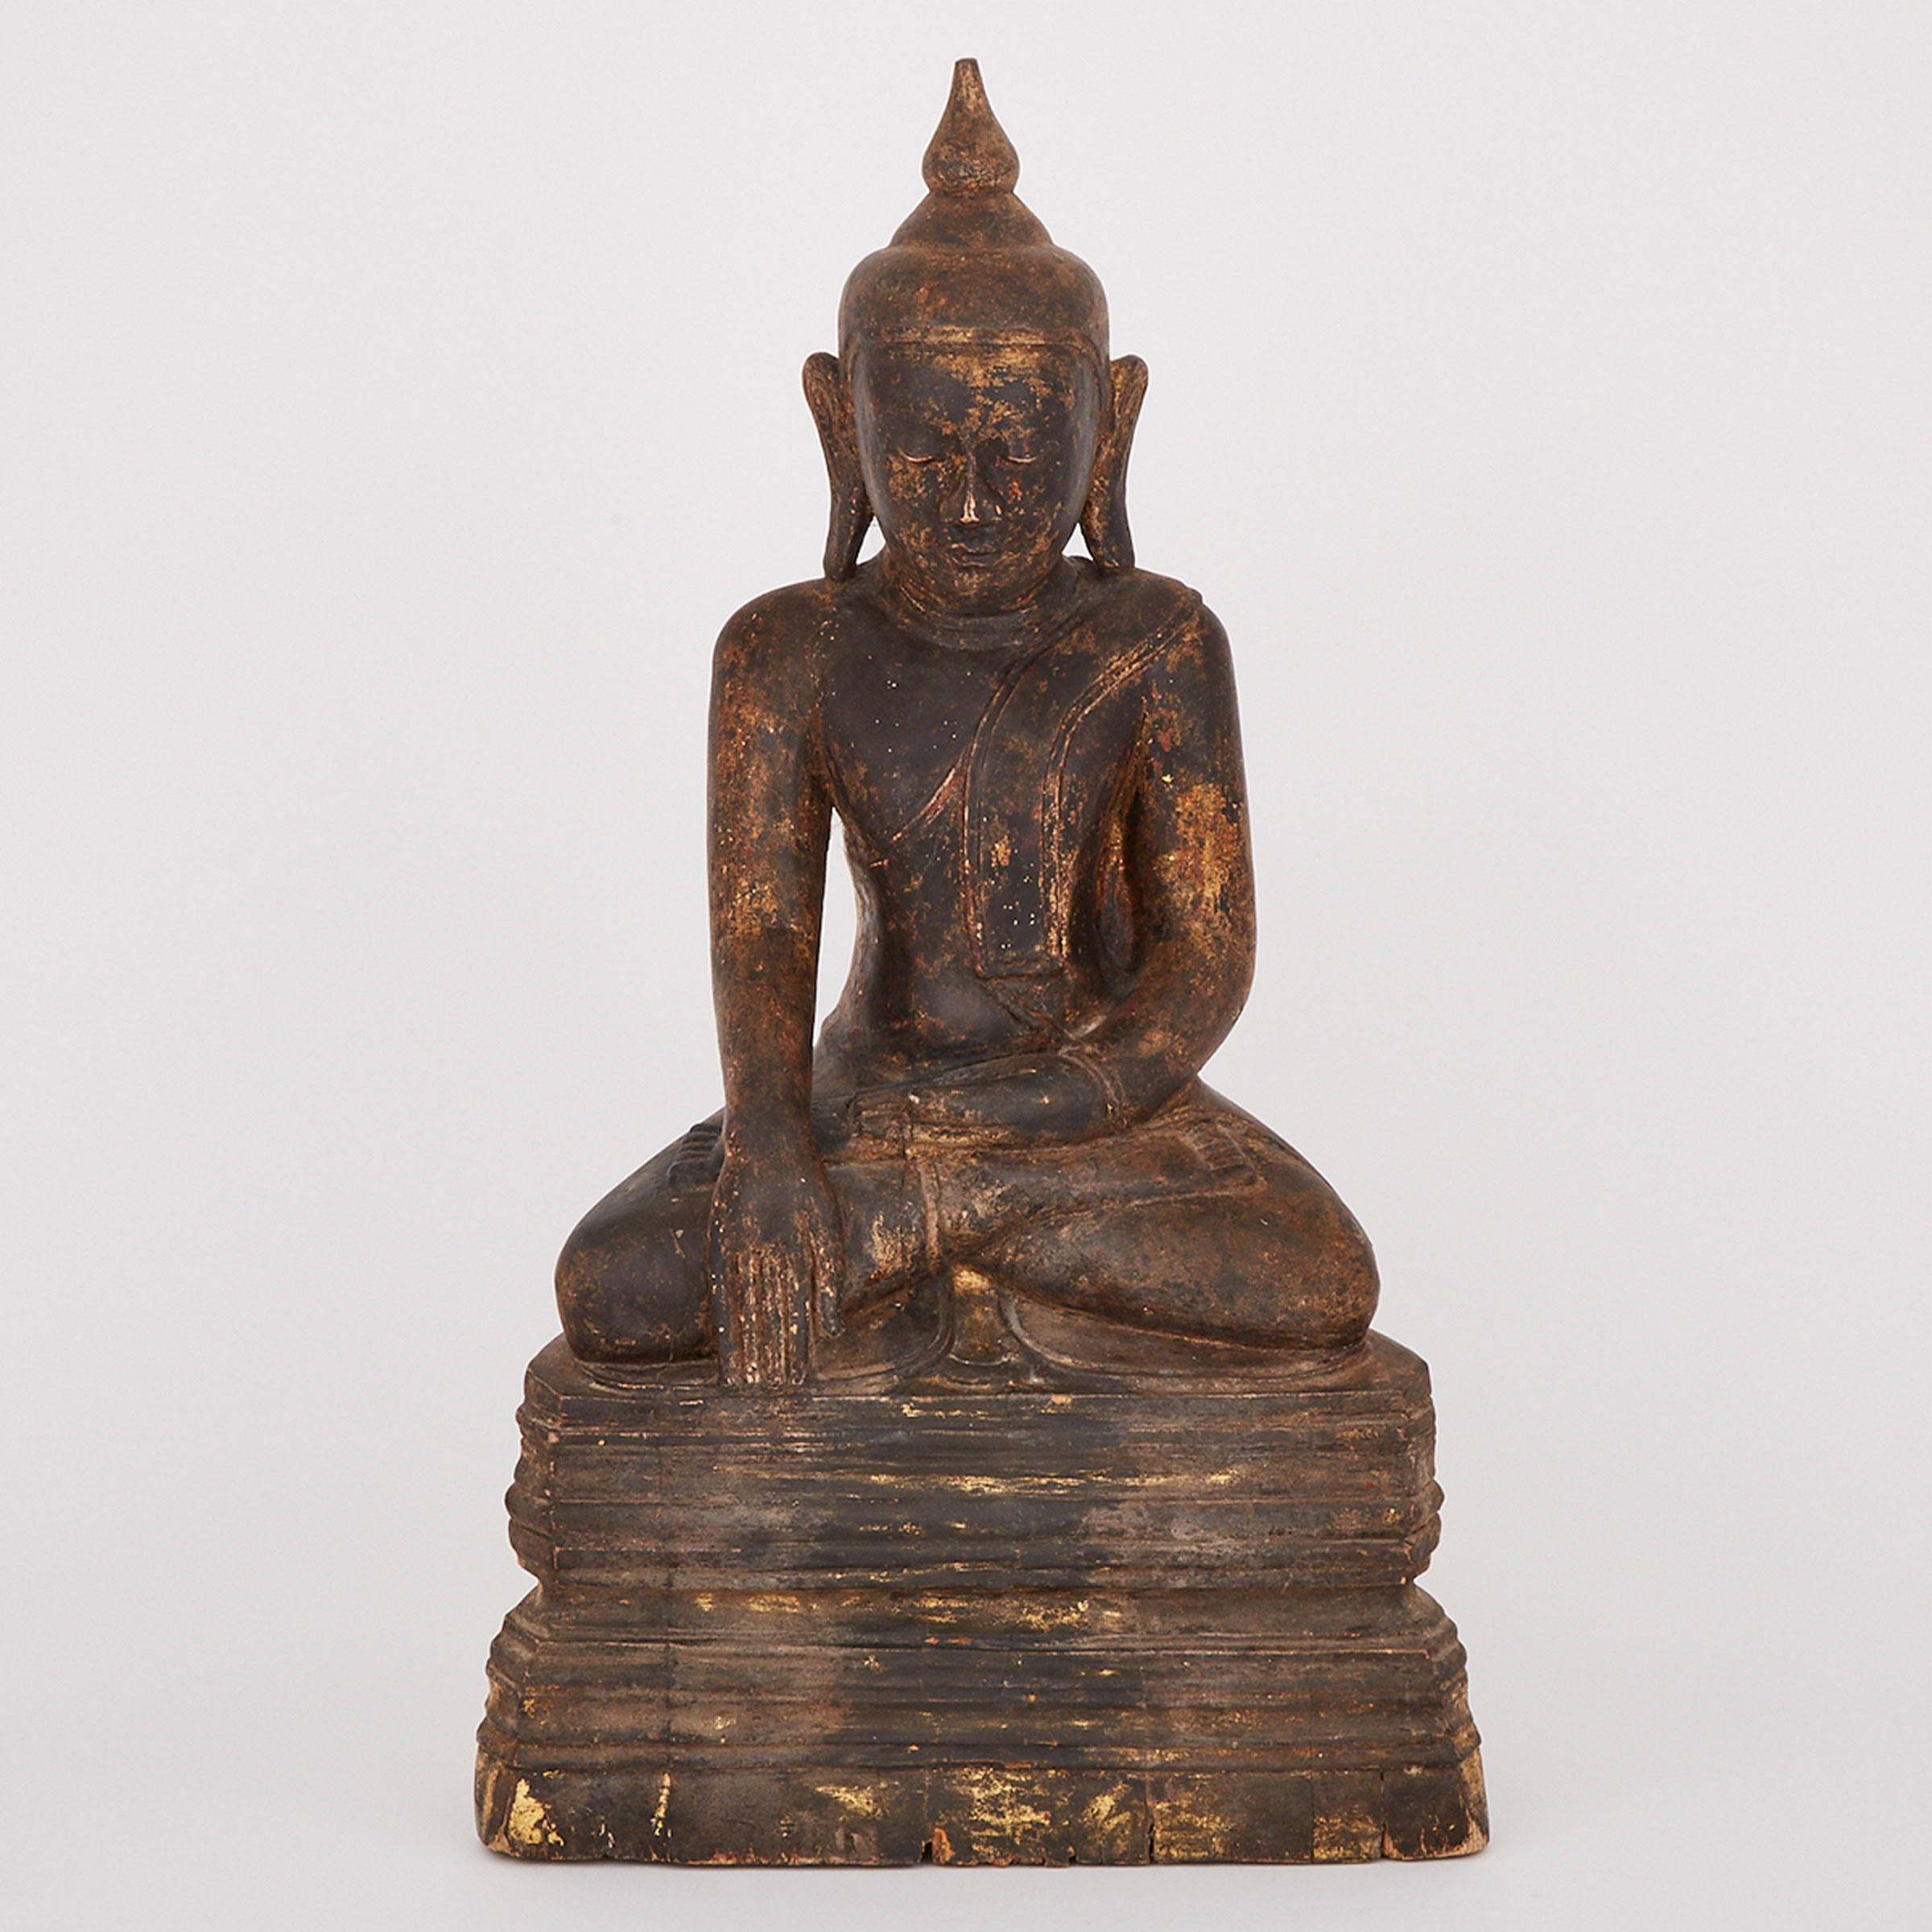 A Seated Wood Carved Buddha, Ava Period, Burma, 16th/17th century